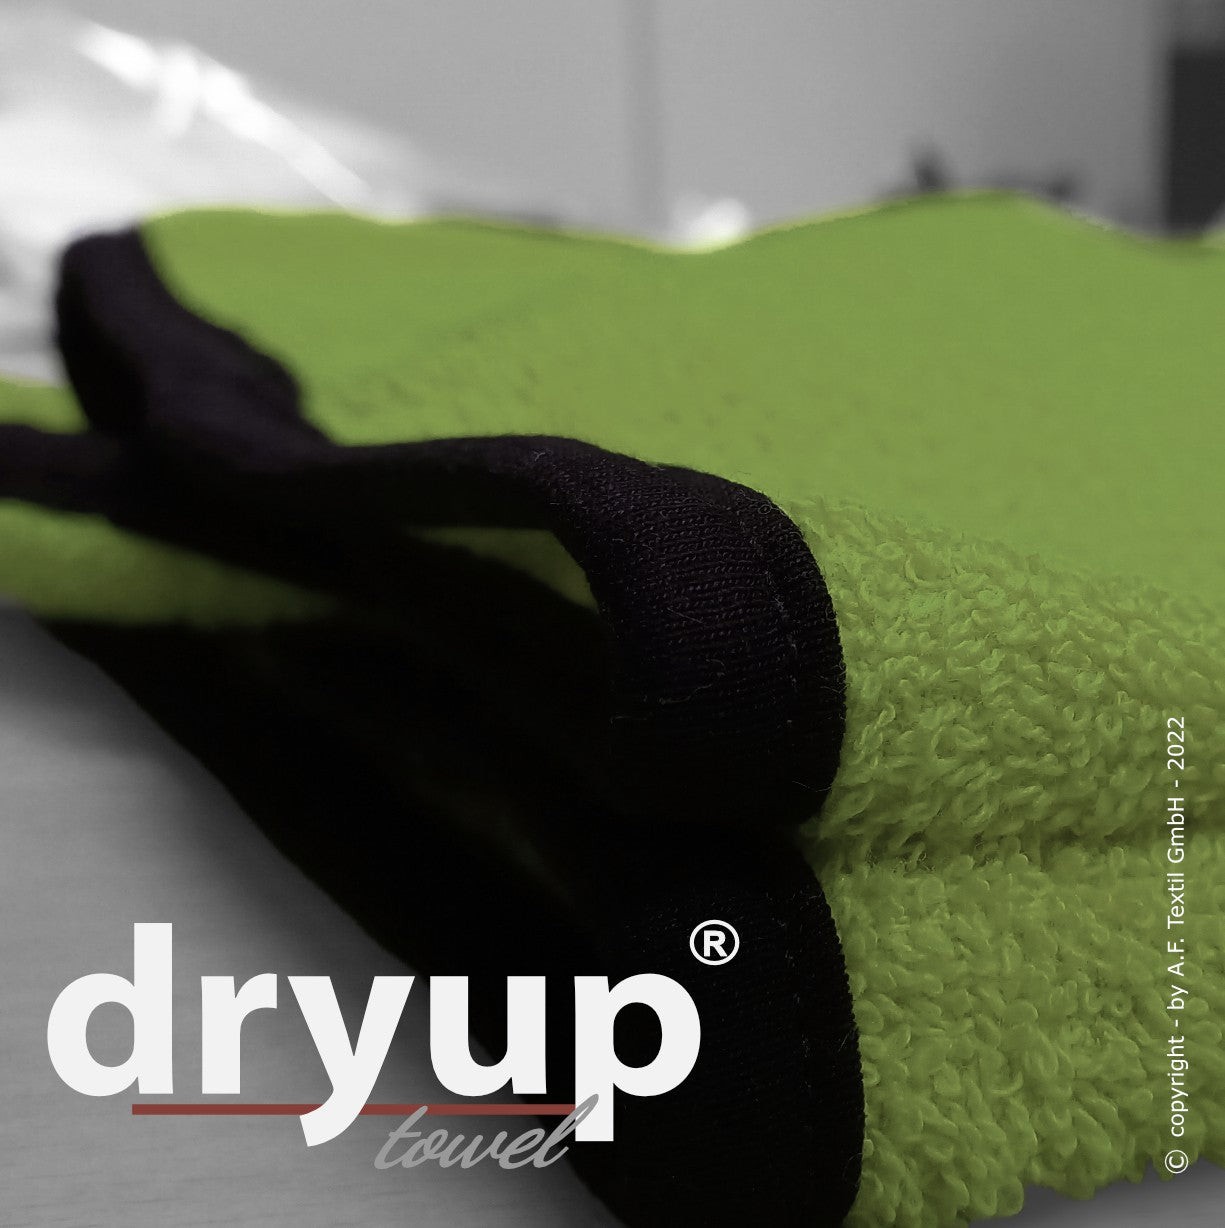 Dryup Towel - Discovery Fashion